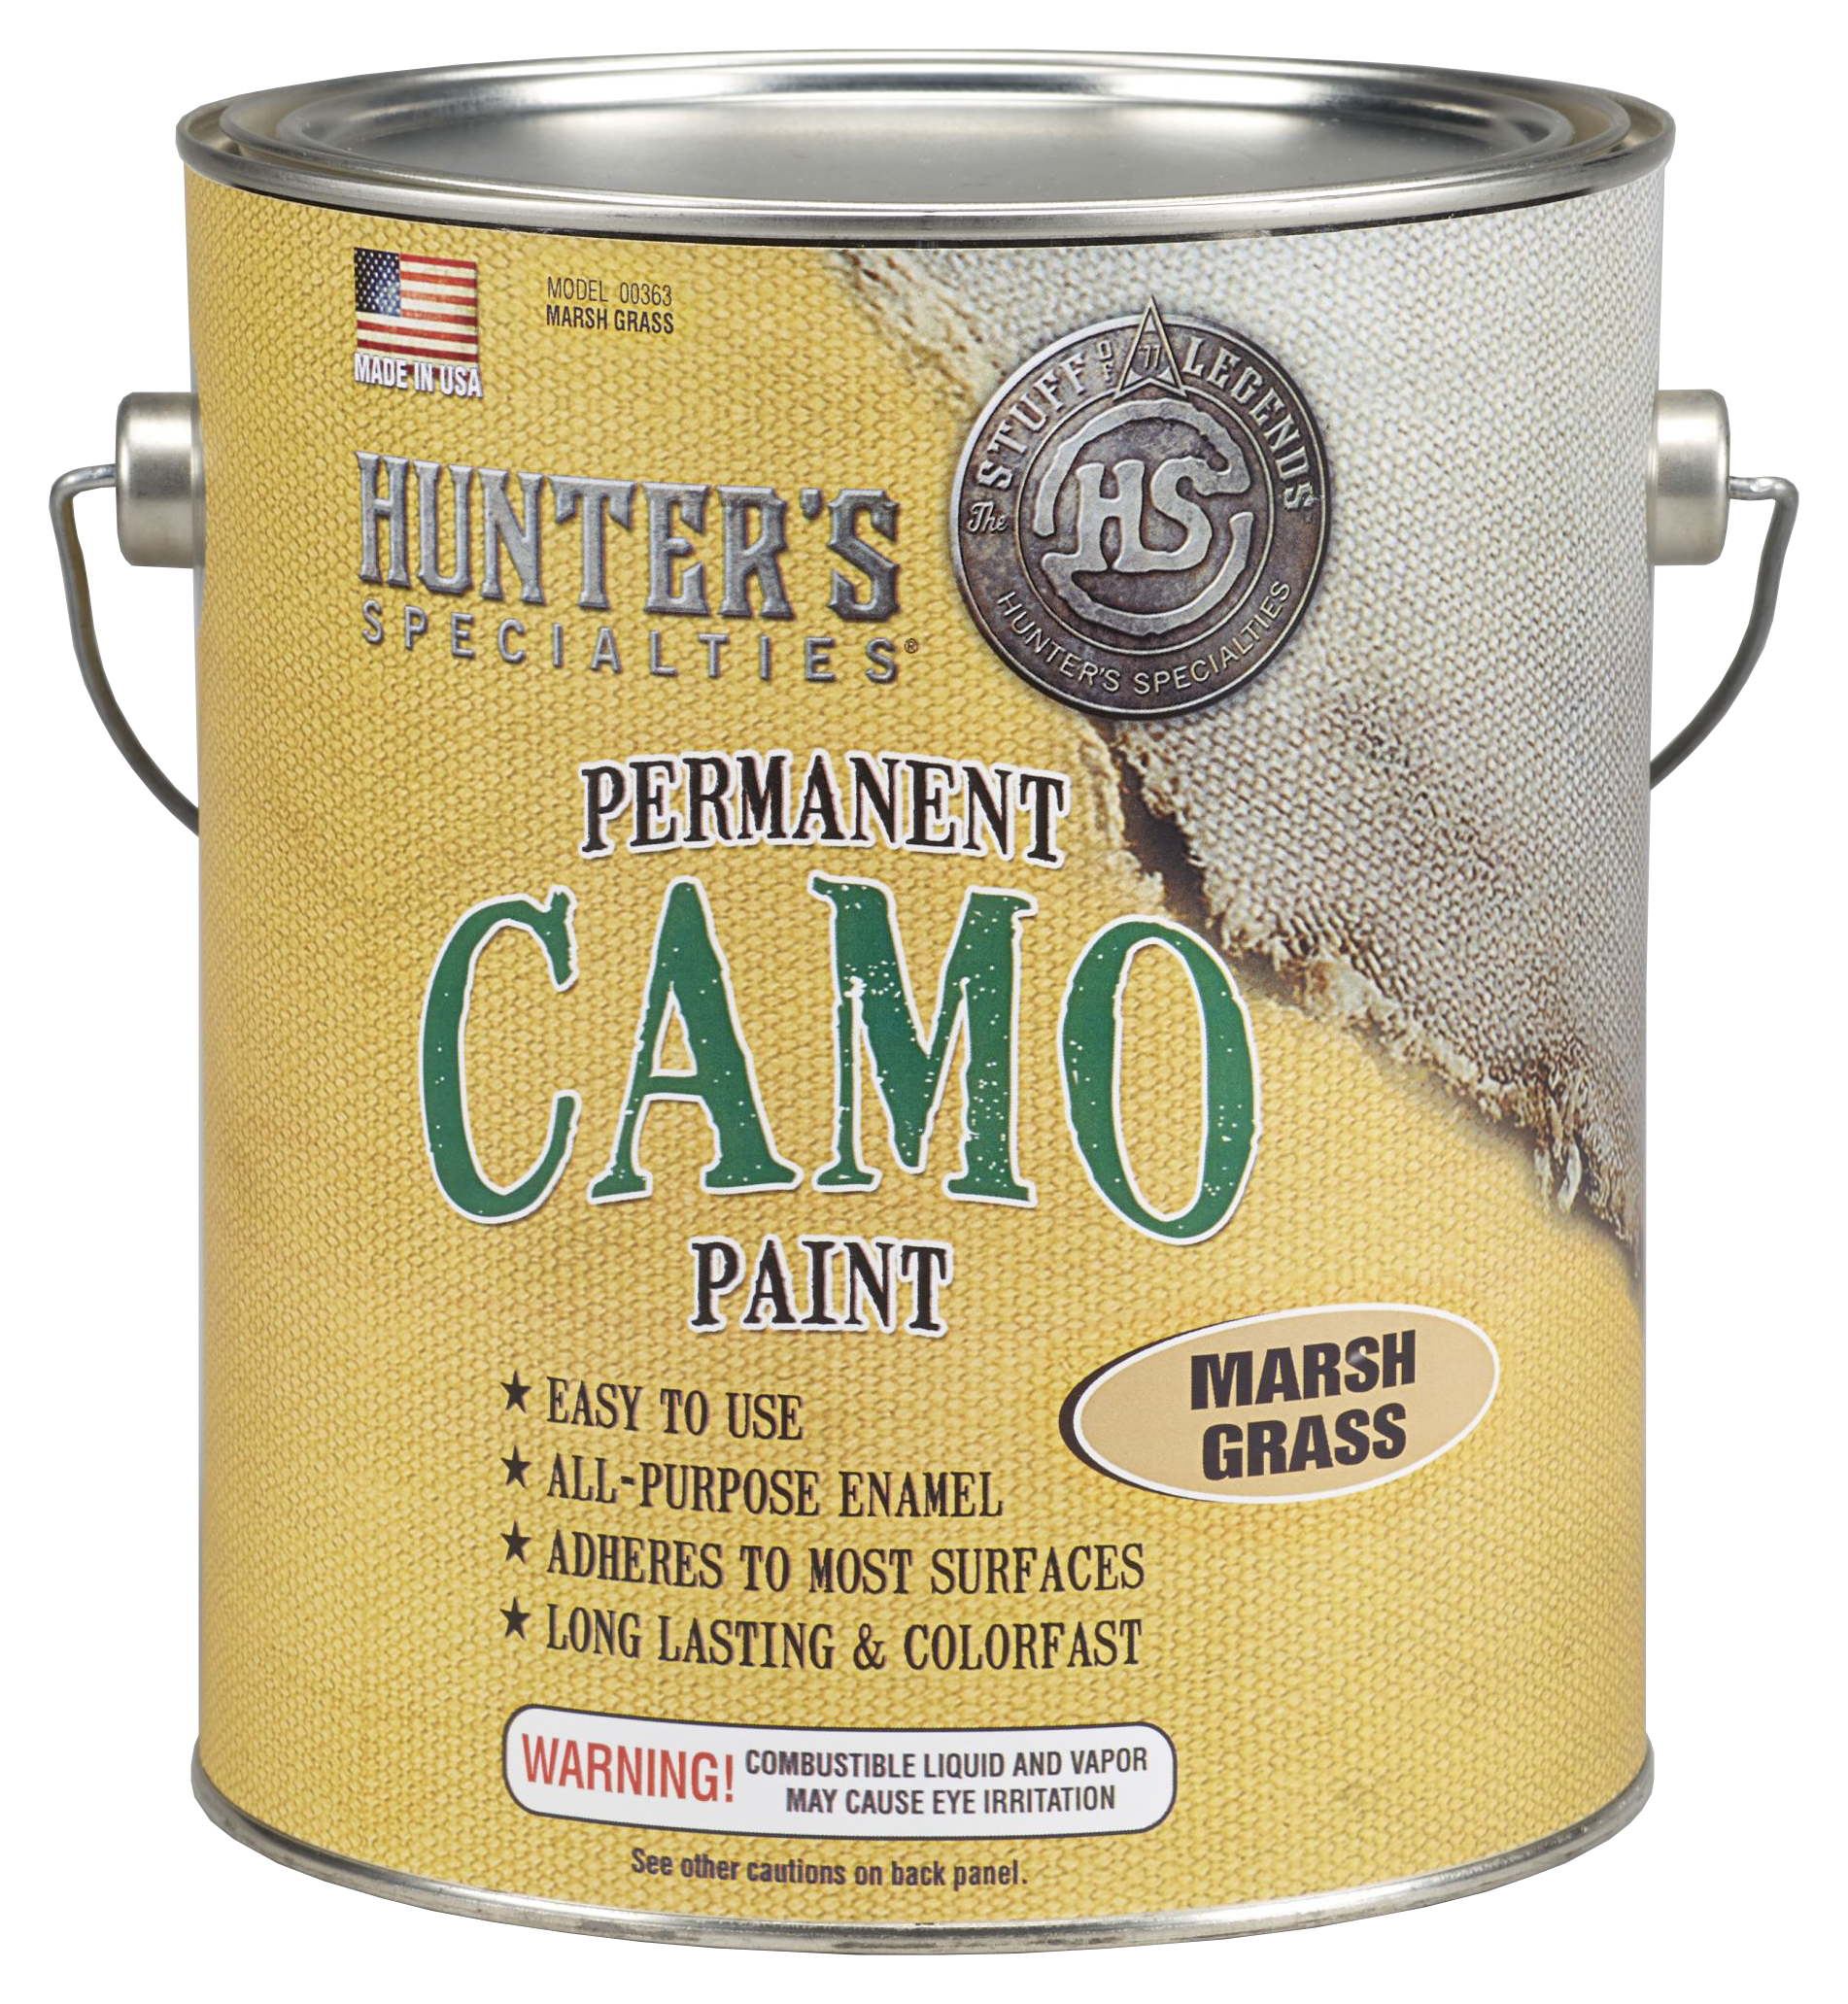 Hunters Specialties Spray Paint